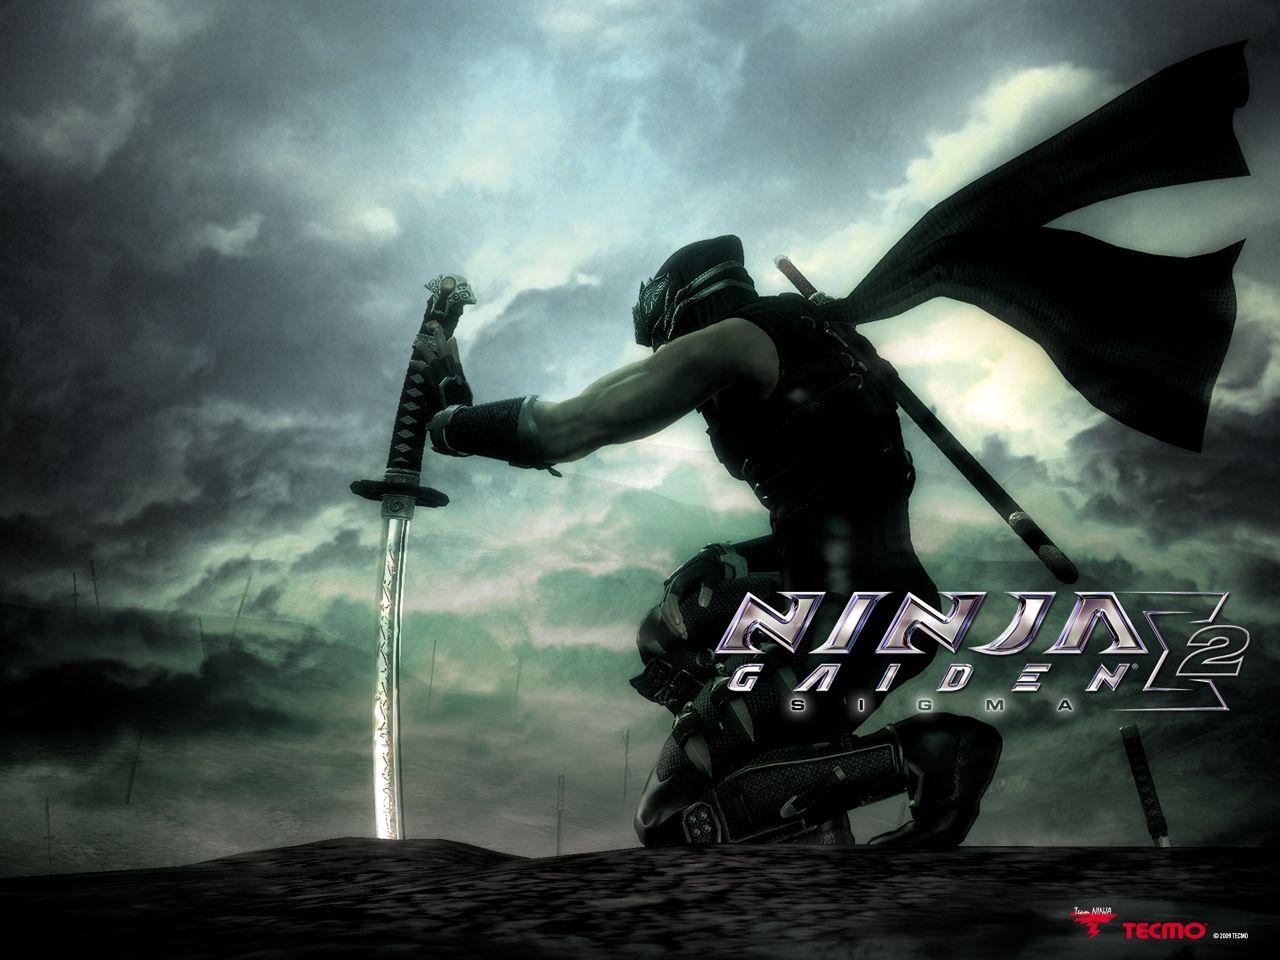 Ninja wallpaper HD. Funny & Amazing Image